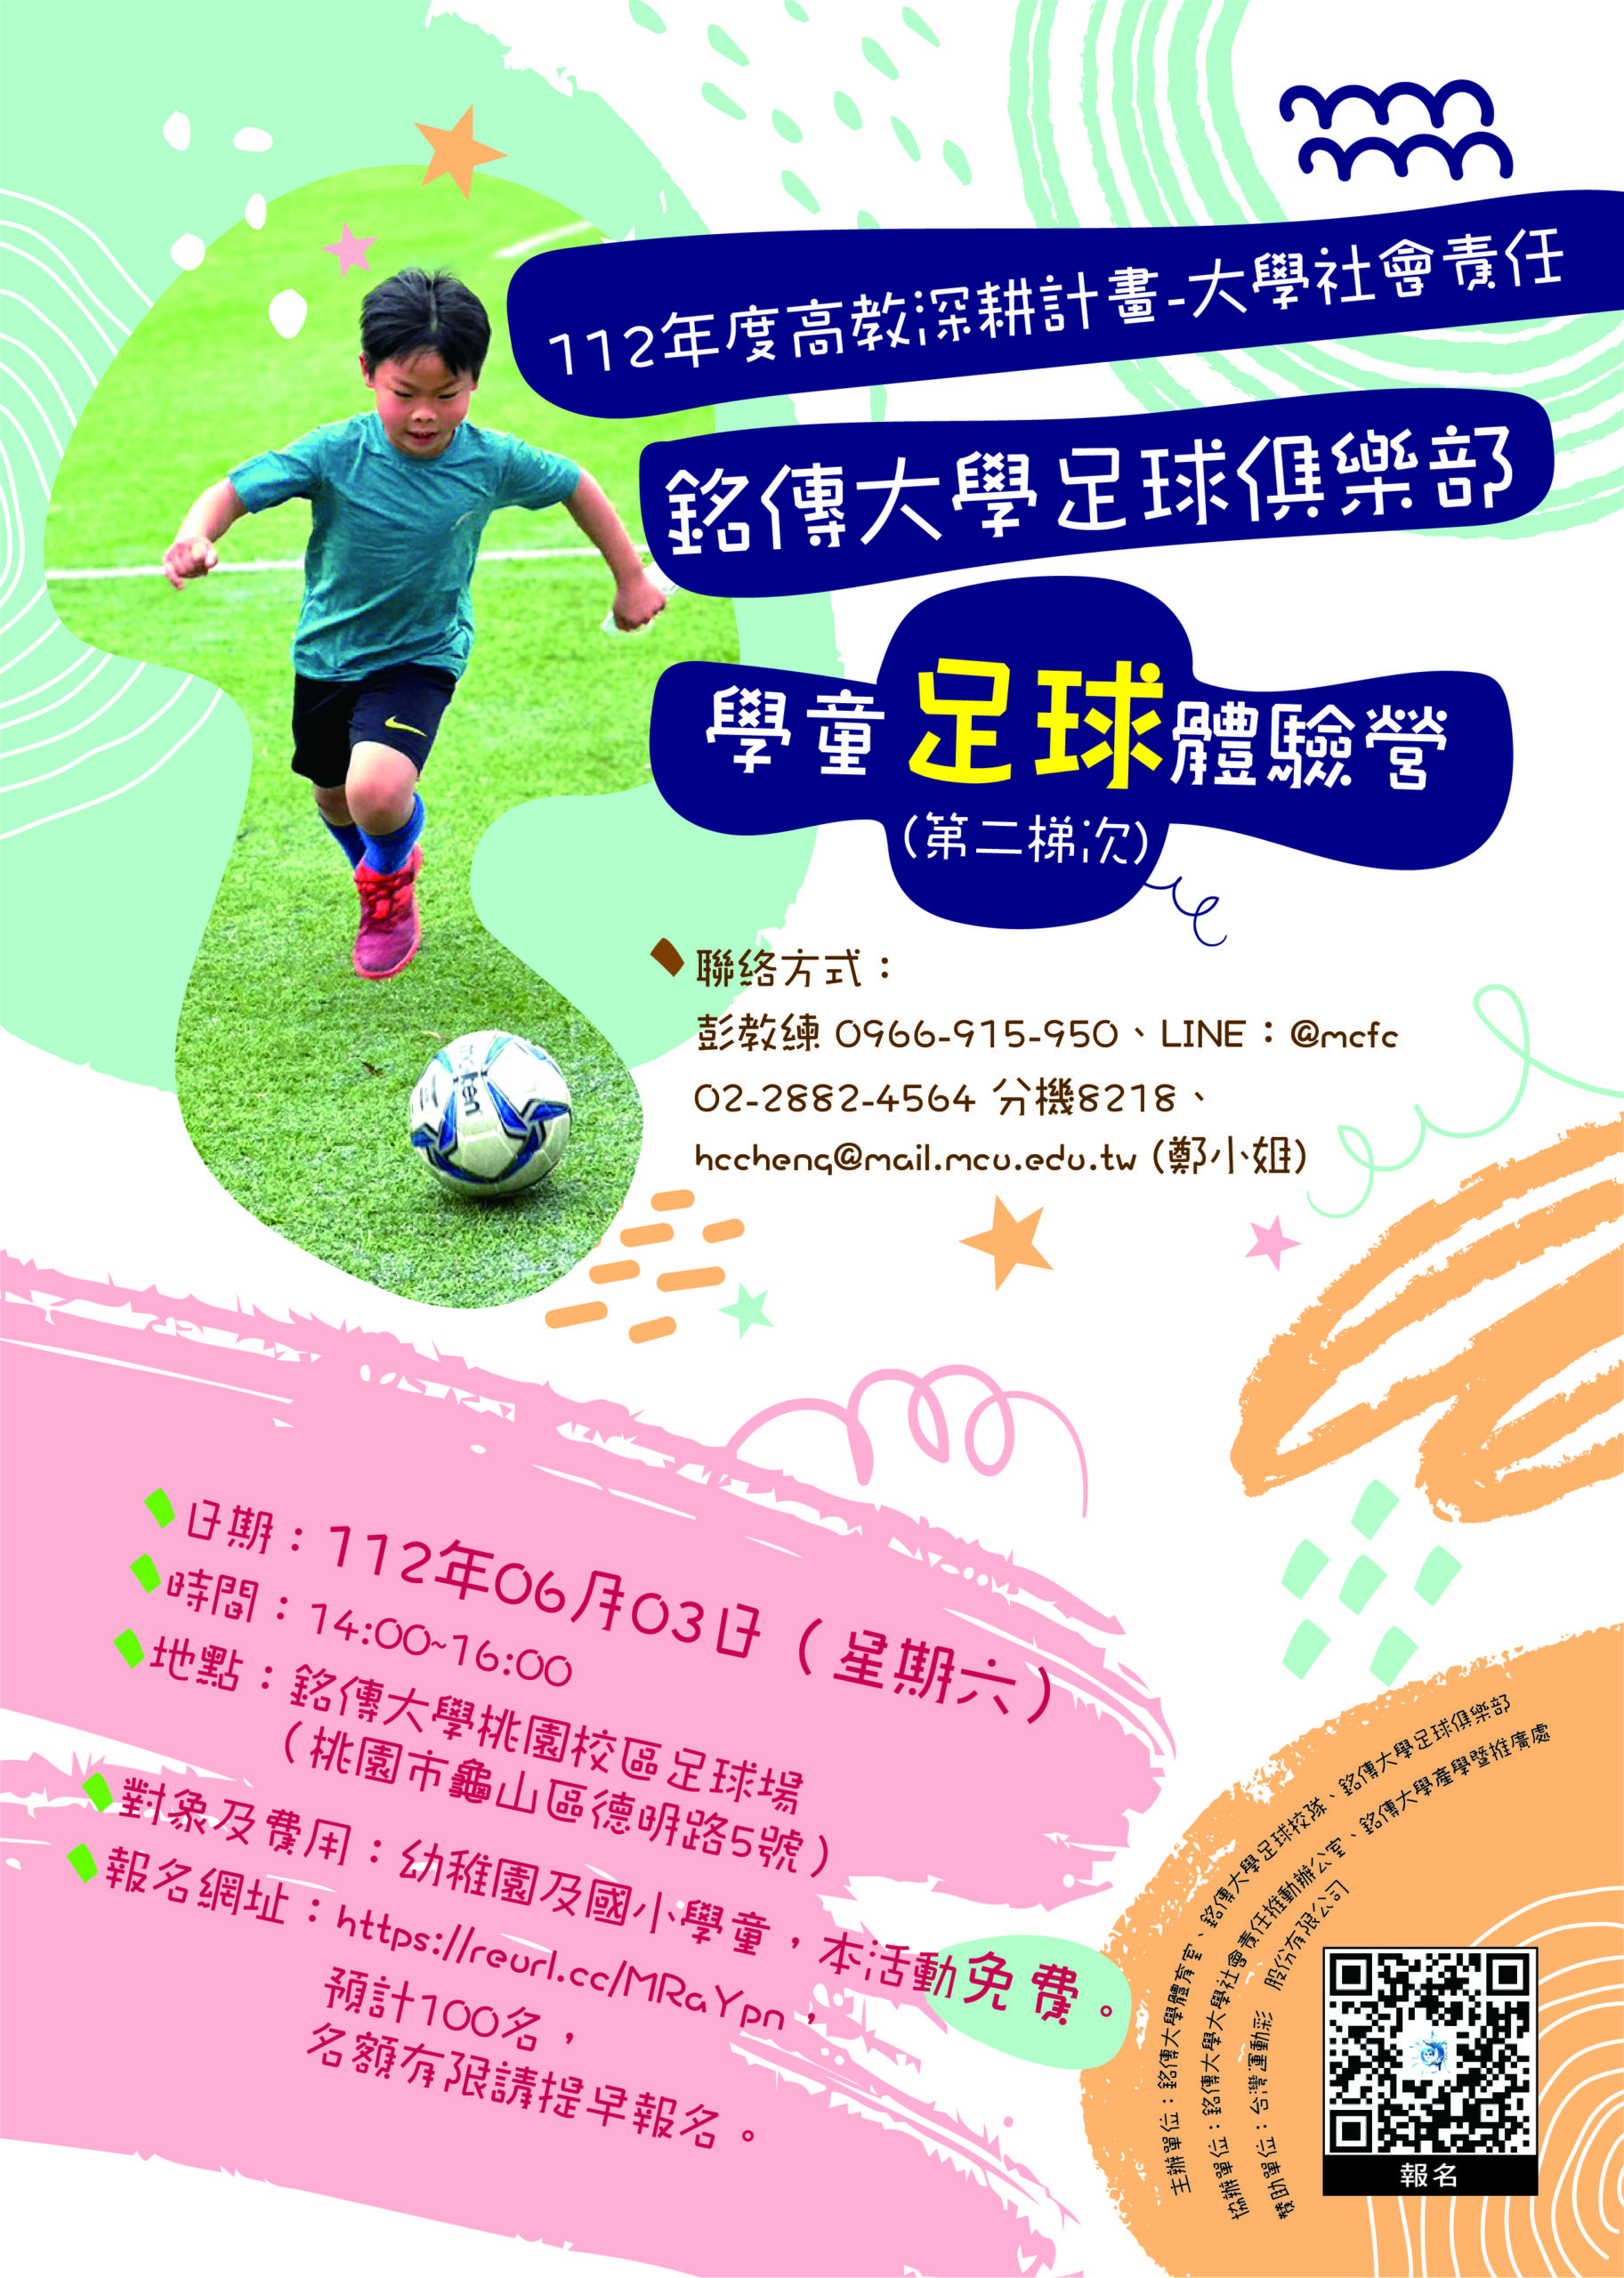 Featured image for “銘傳足球俱樂部2023夏令營招生簡章”